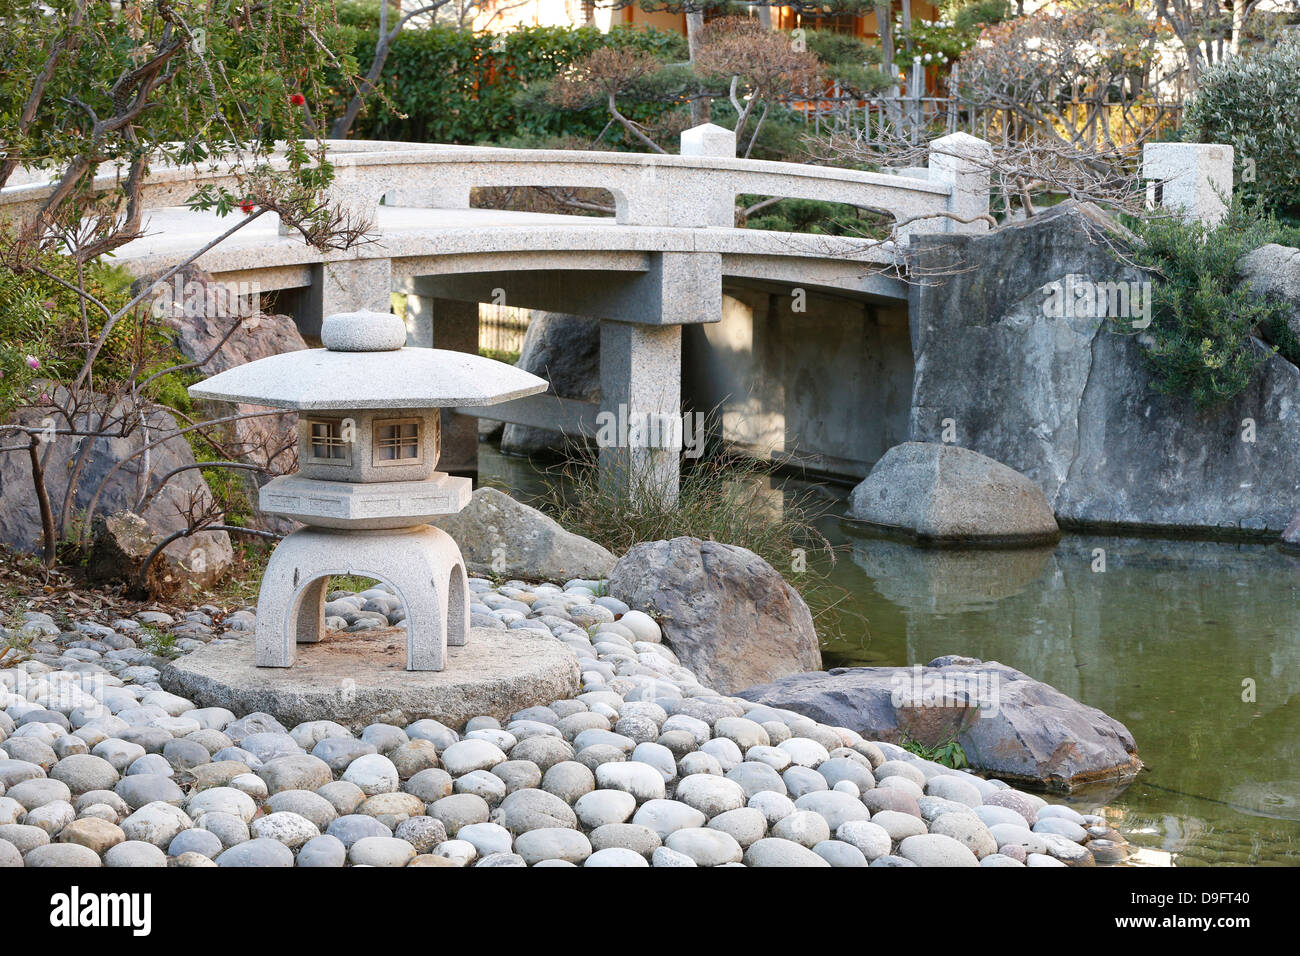 Linternas de piedra, un jardín japonés, Mónaco Foto de stock